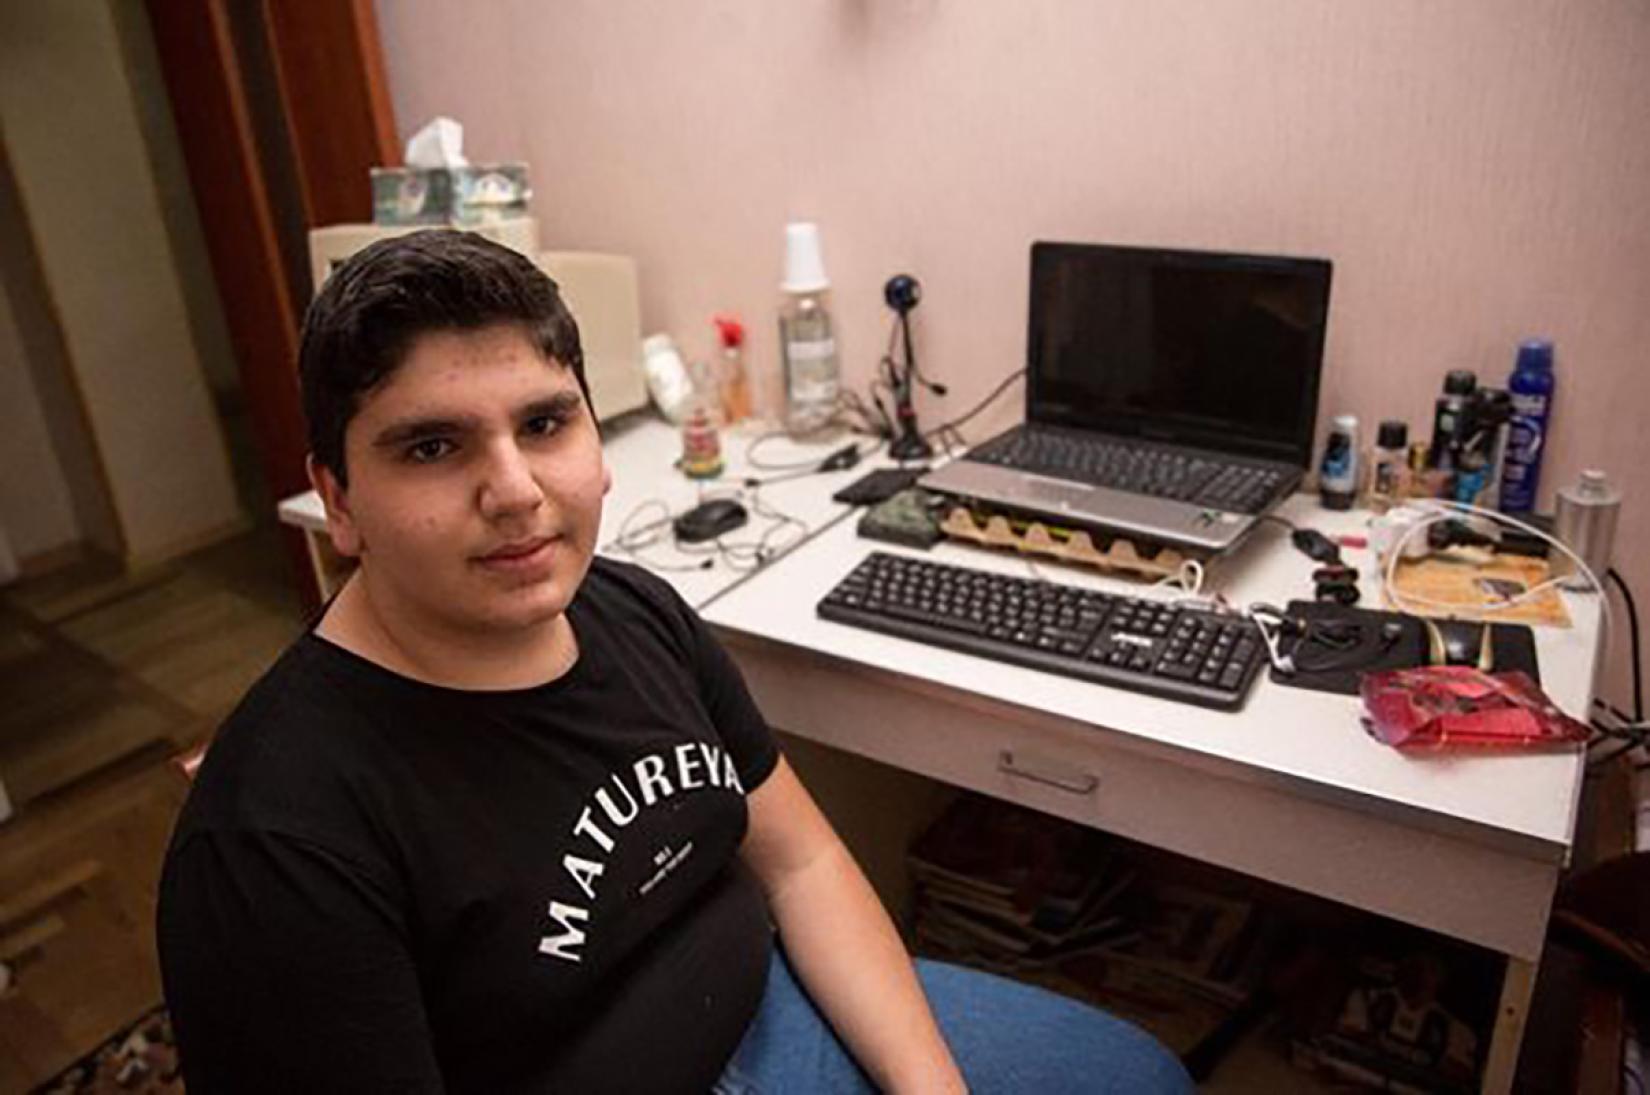 Matevos sitting next to his computer. 